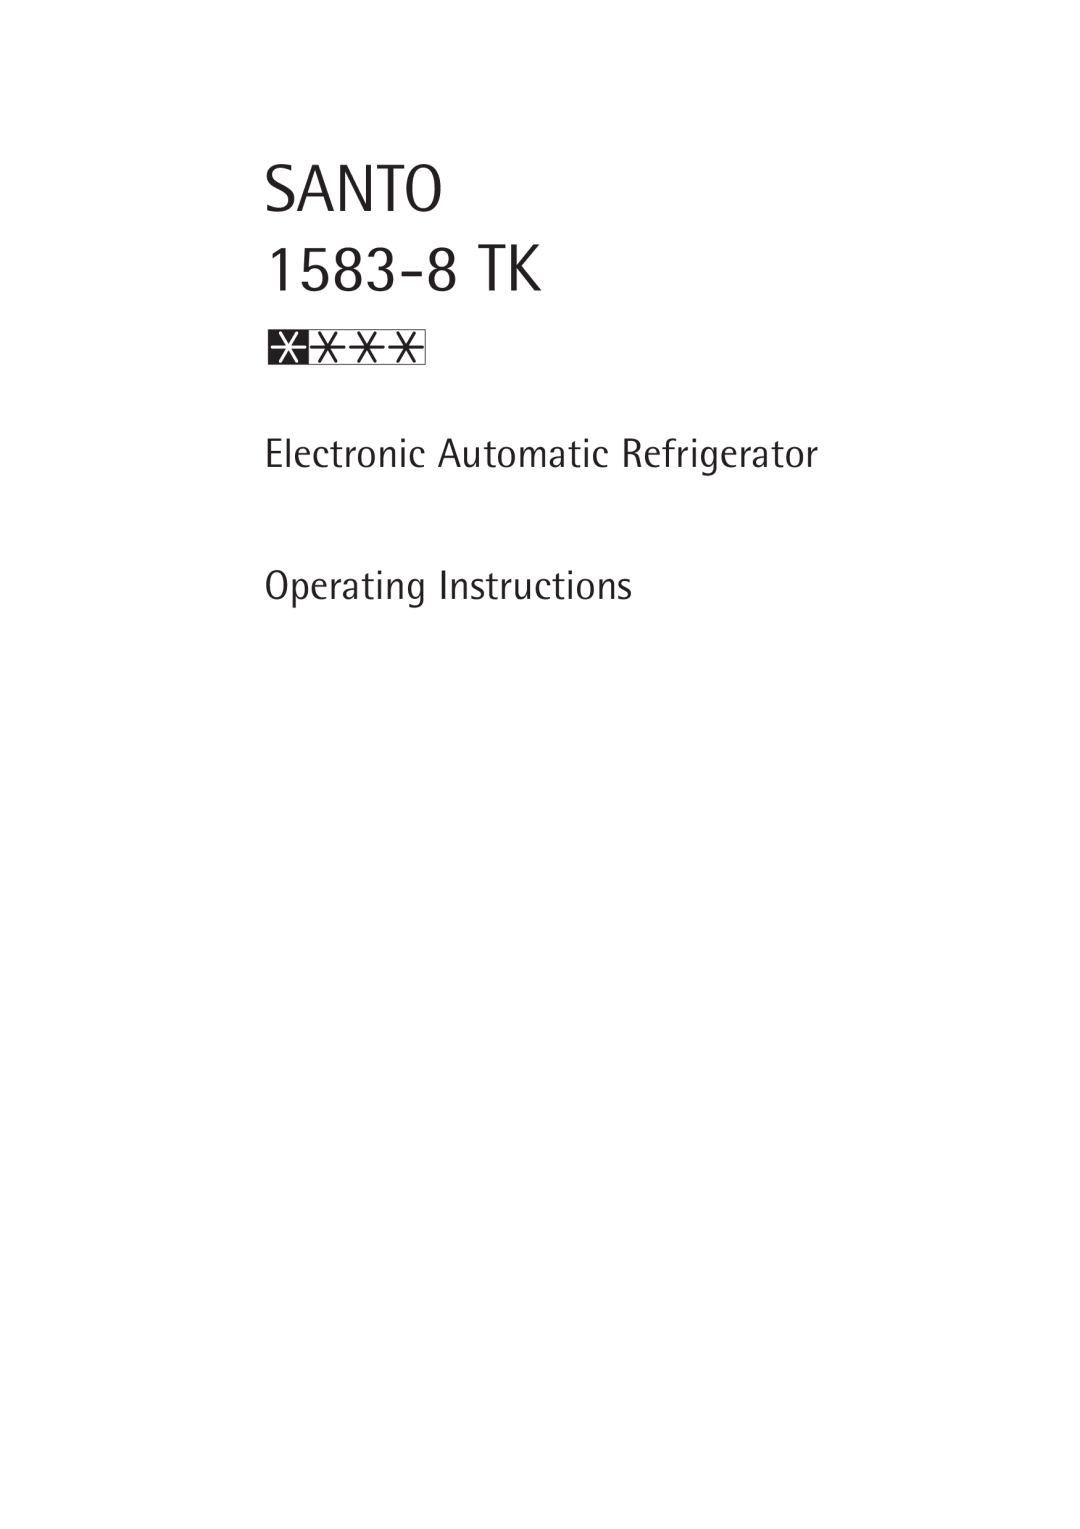 Electrolux operating instructions SANTO 1583-8 TK, Electronic Automatic Refrigerator Operating Instructions 